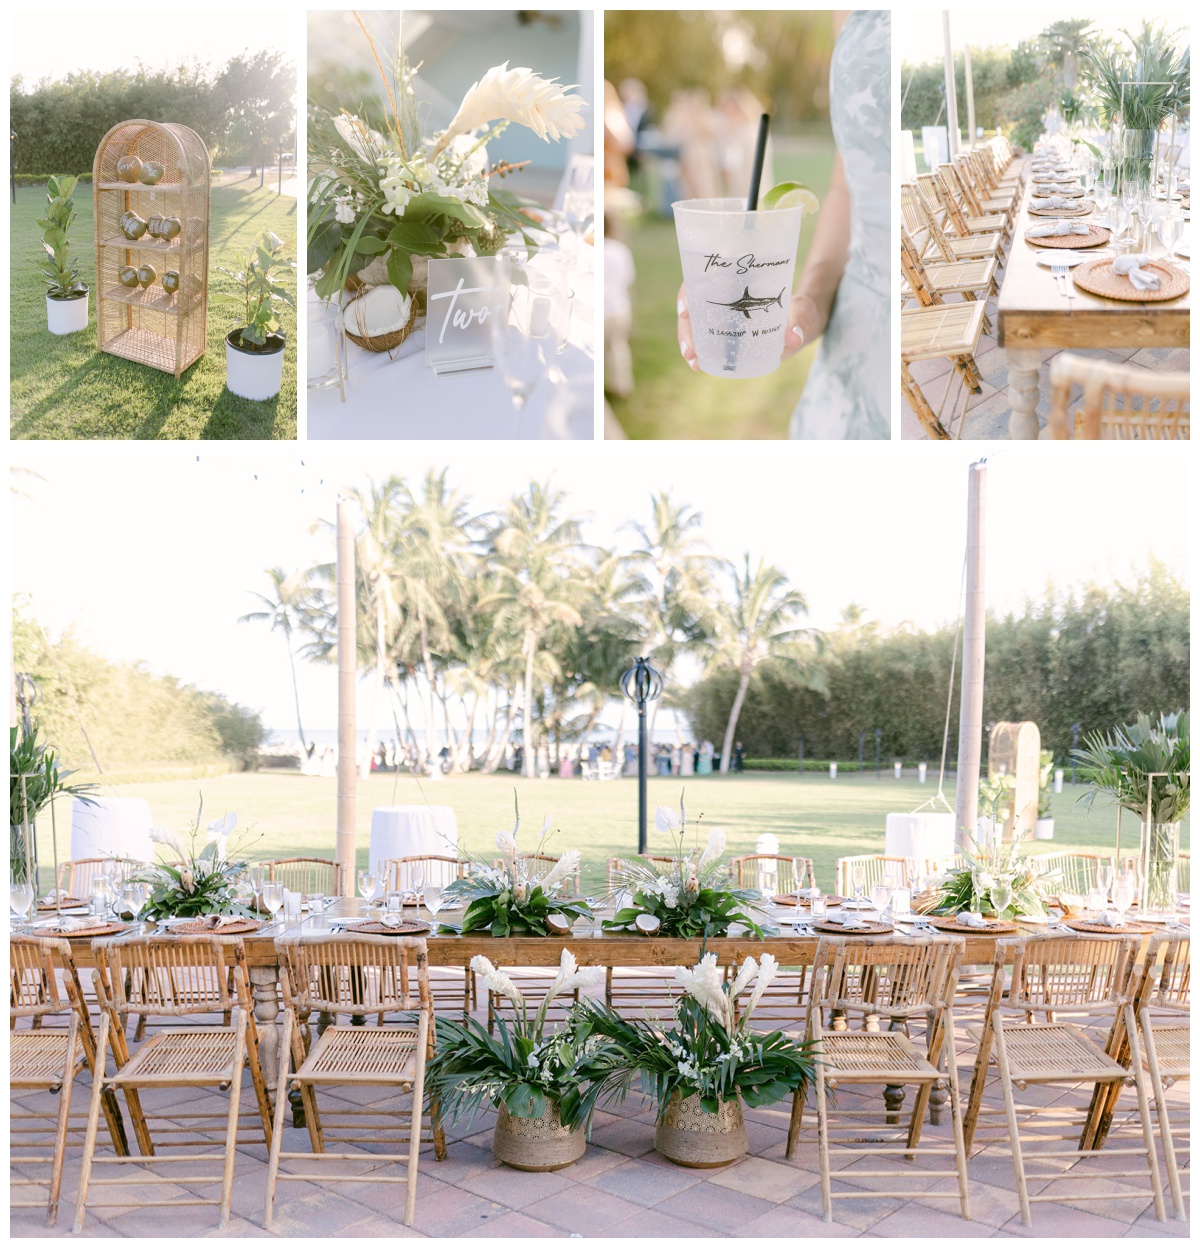 Islander Resort Wedding Reception in Islamorada, Florida